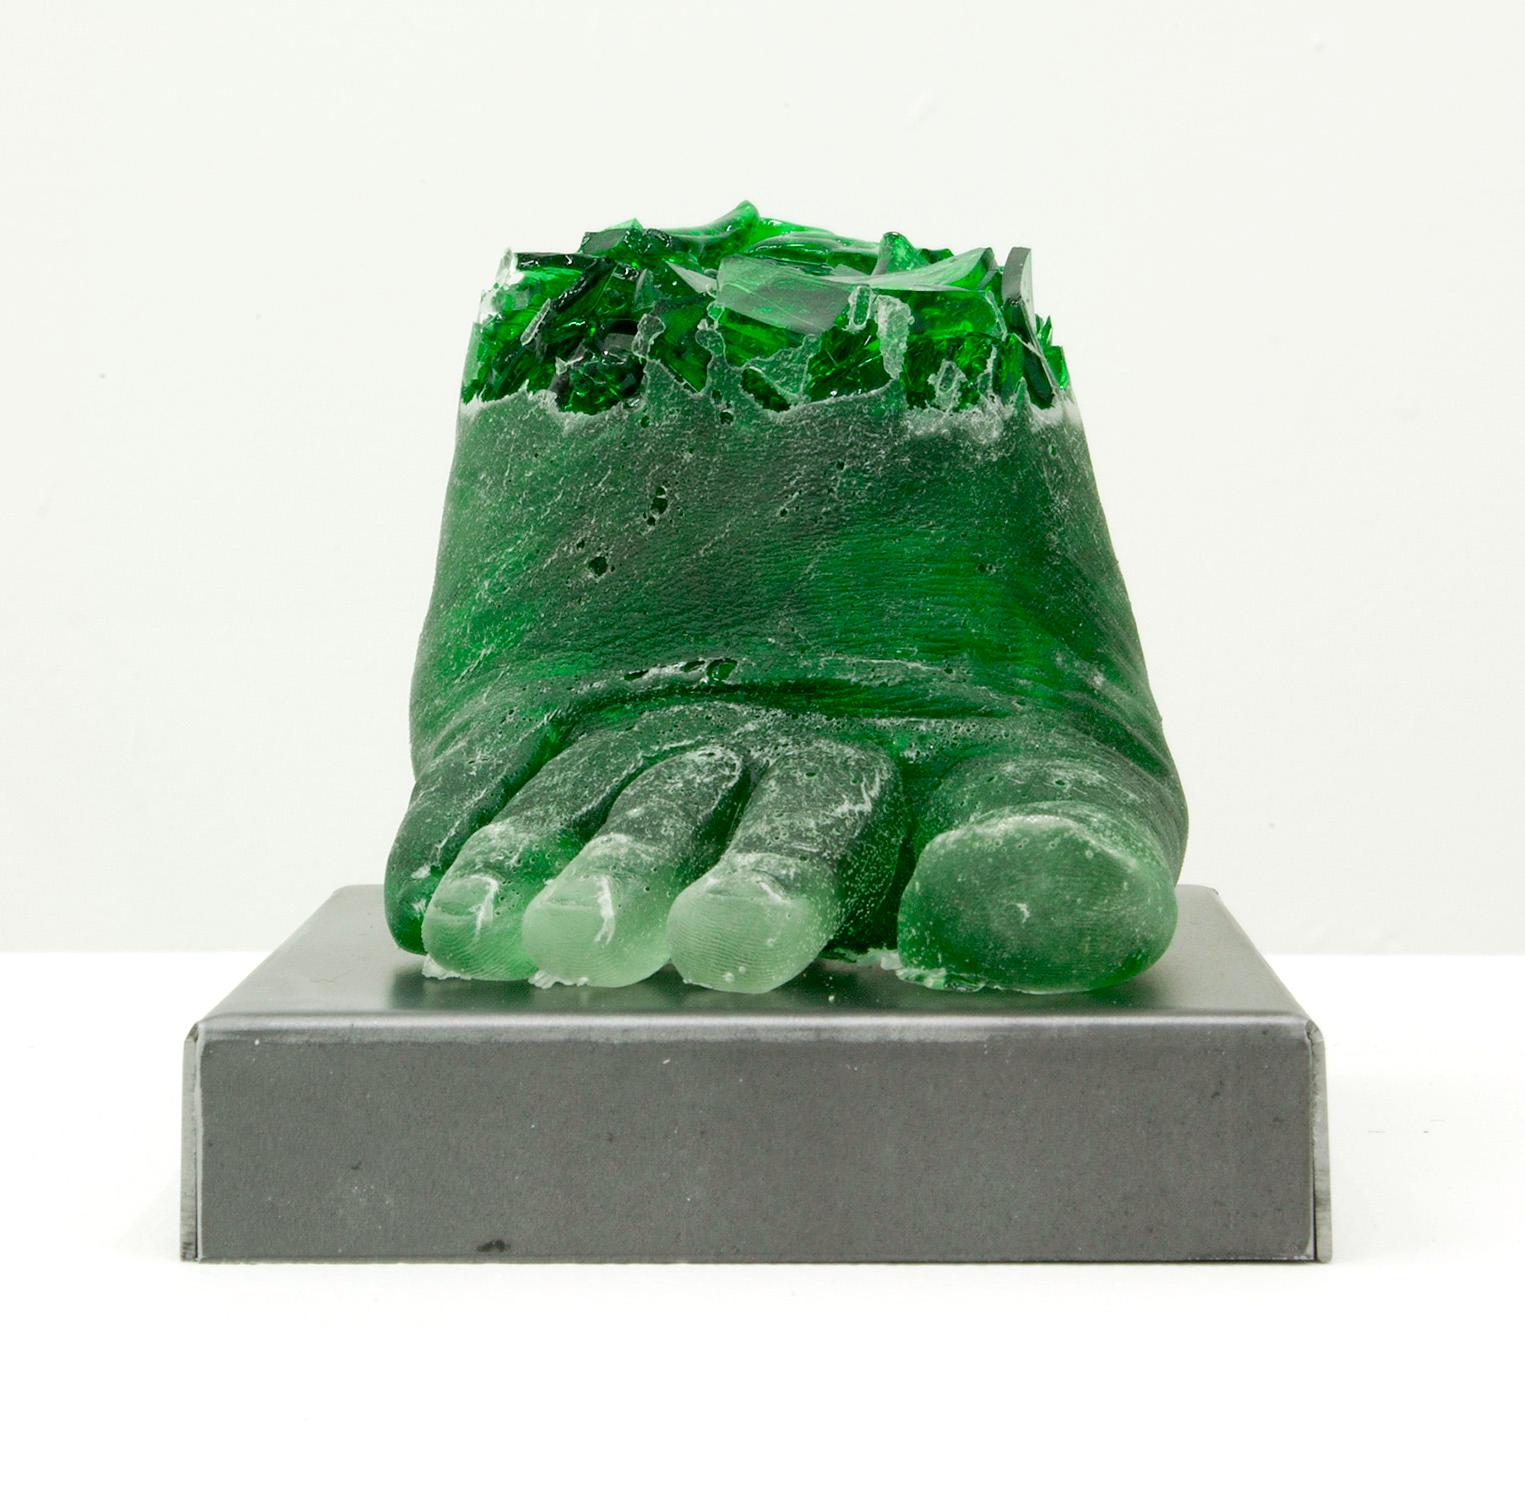 Rachel Owens, Footwear (Green Heel), 2015, Broken glass cast in resin with steel For Sale 1